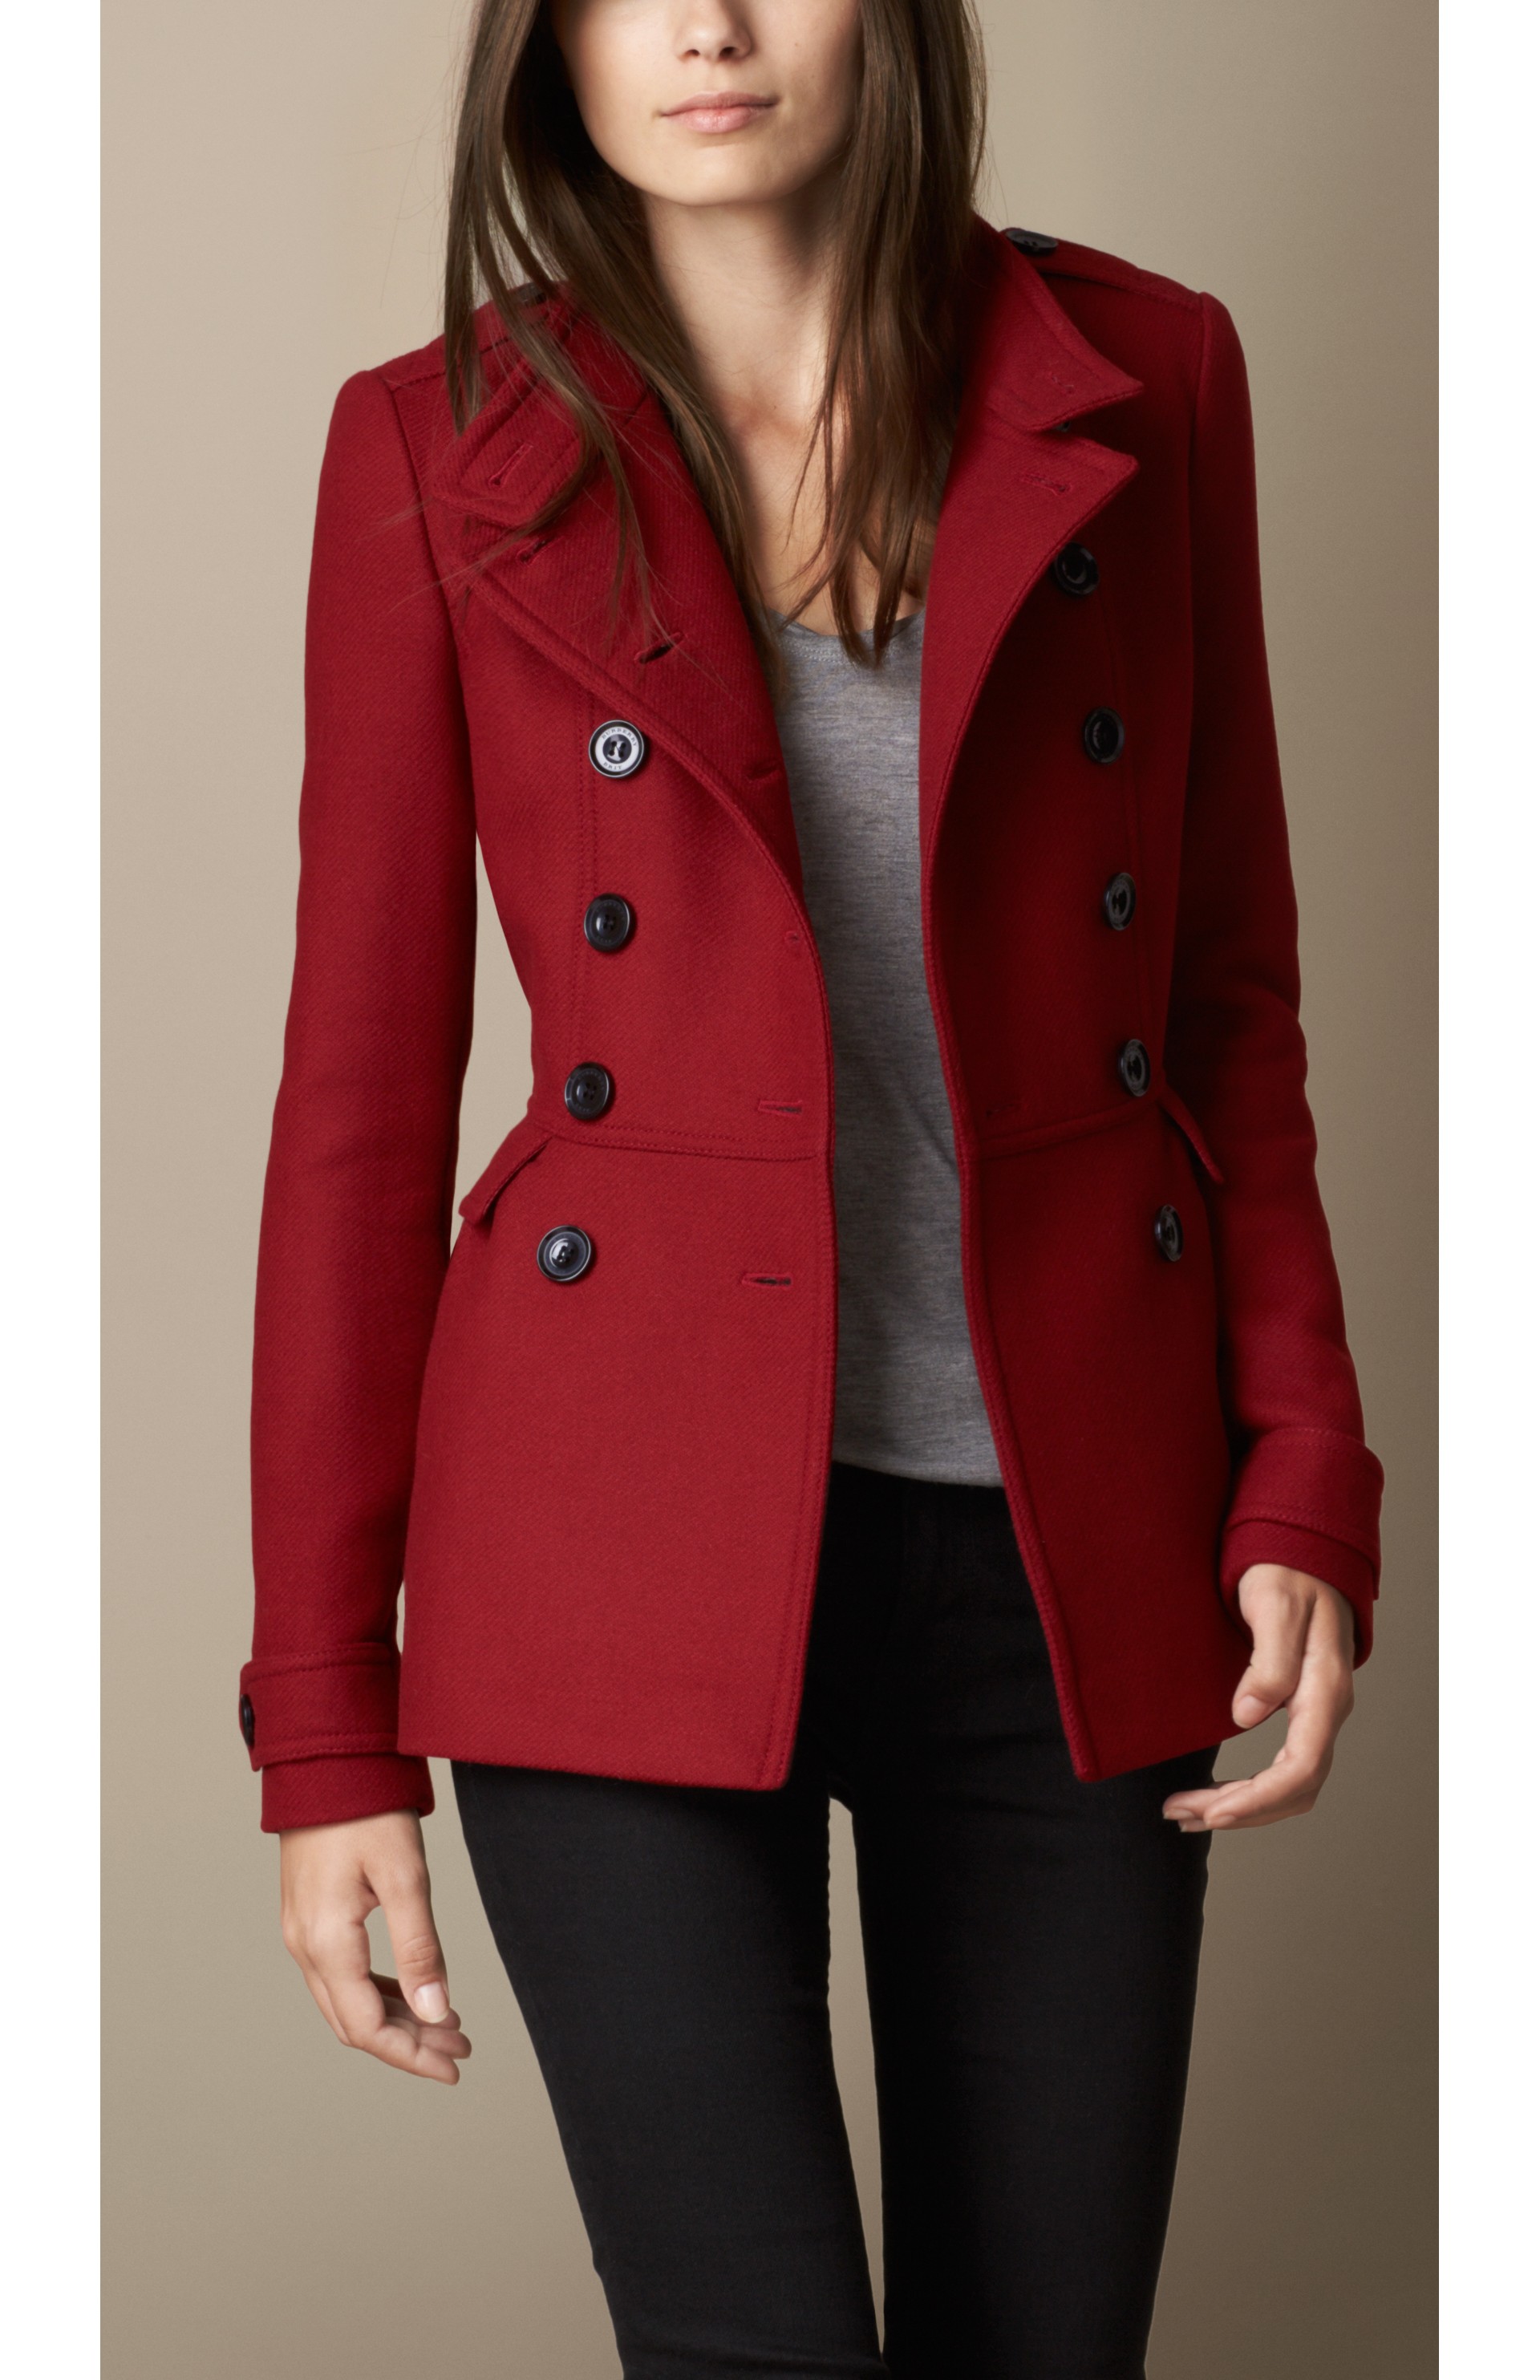 Wool Blend Twill Peplum Coat in Damson Red - Women | Burberry United States